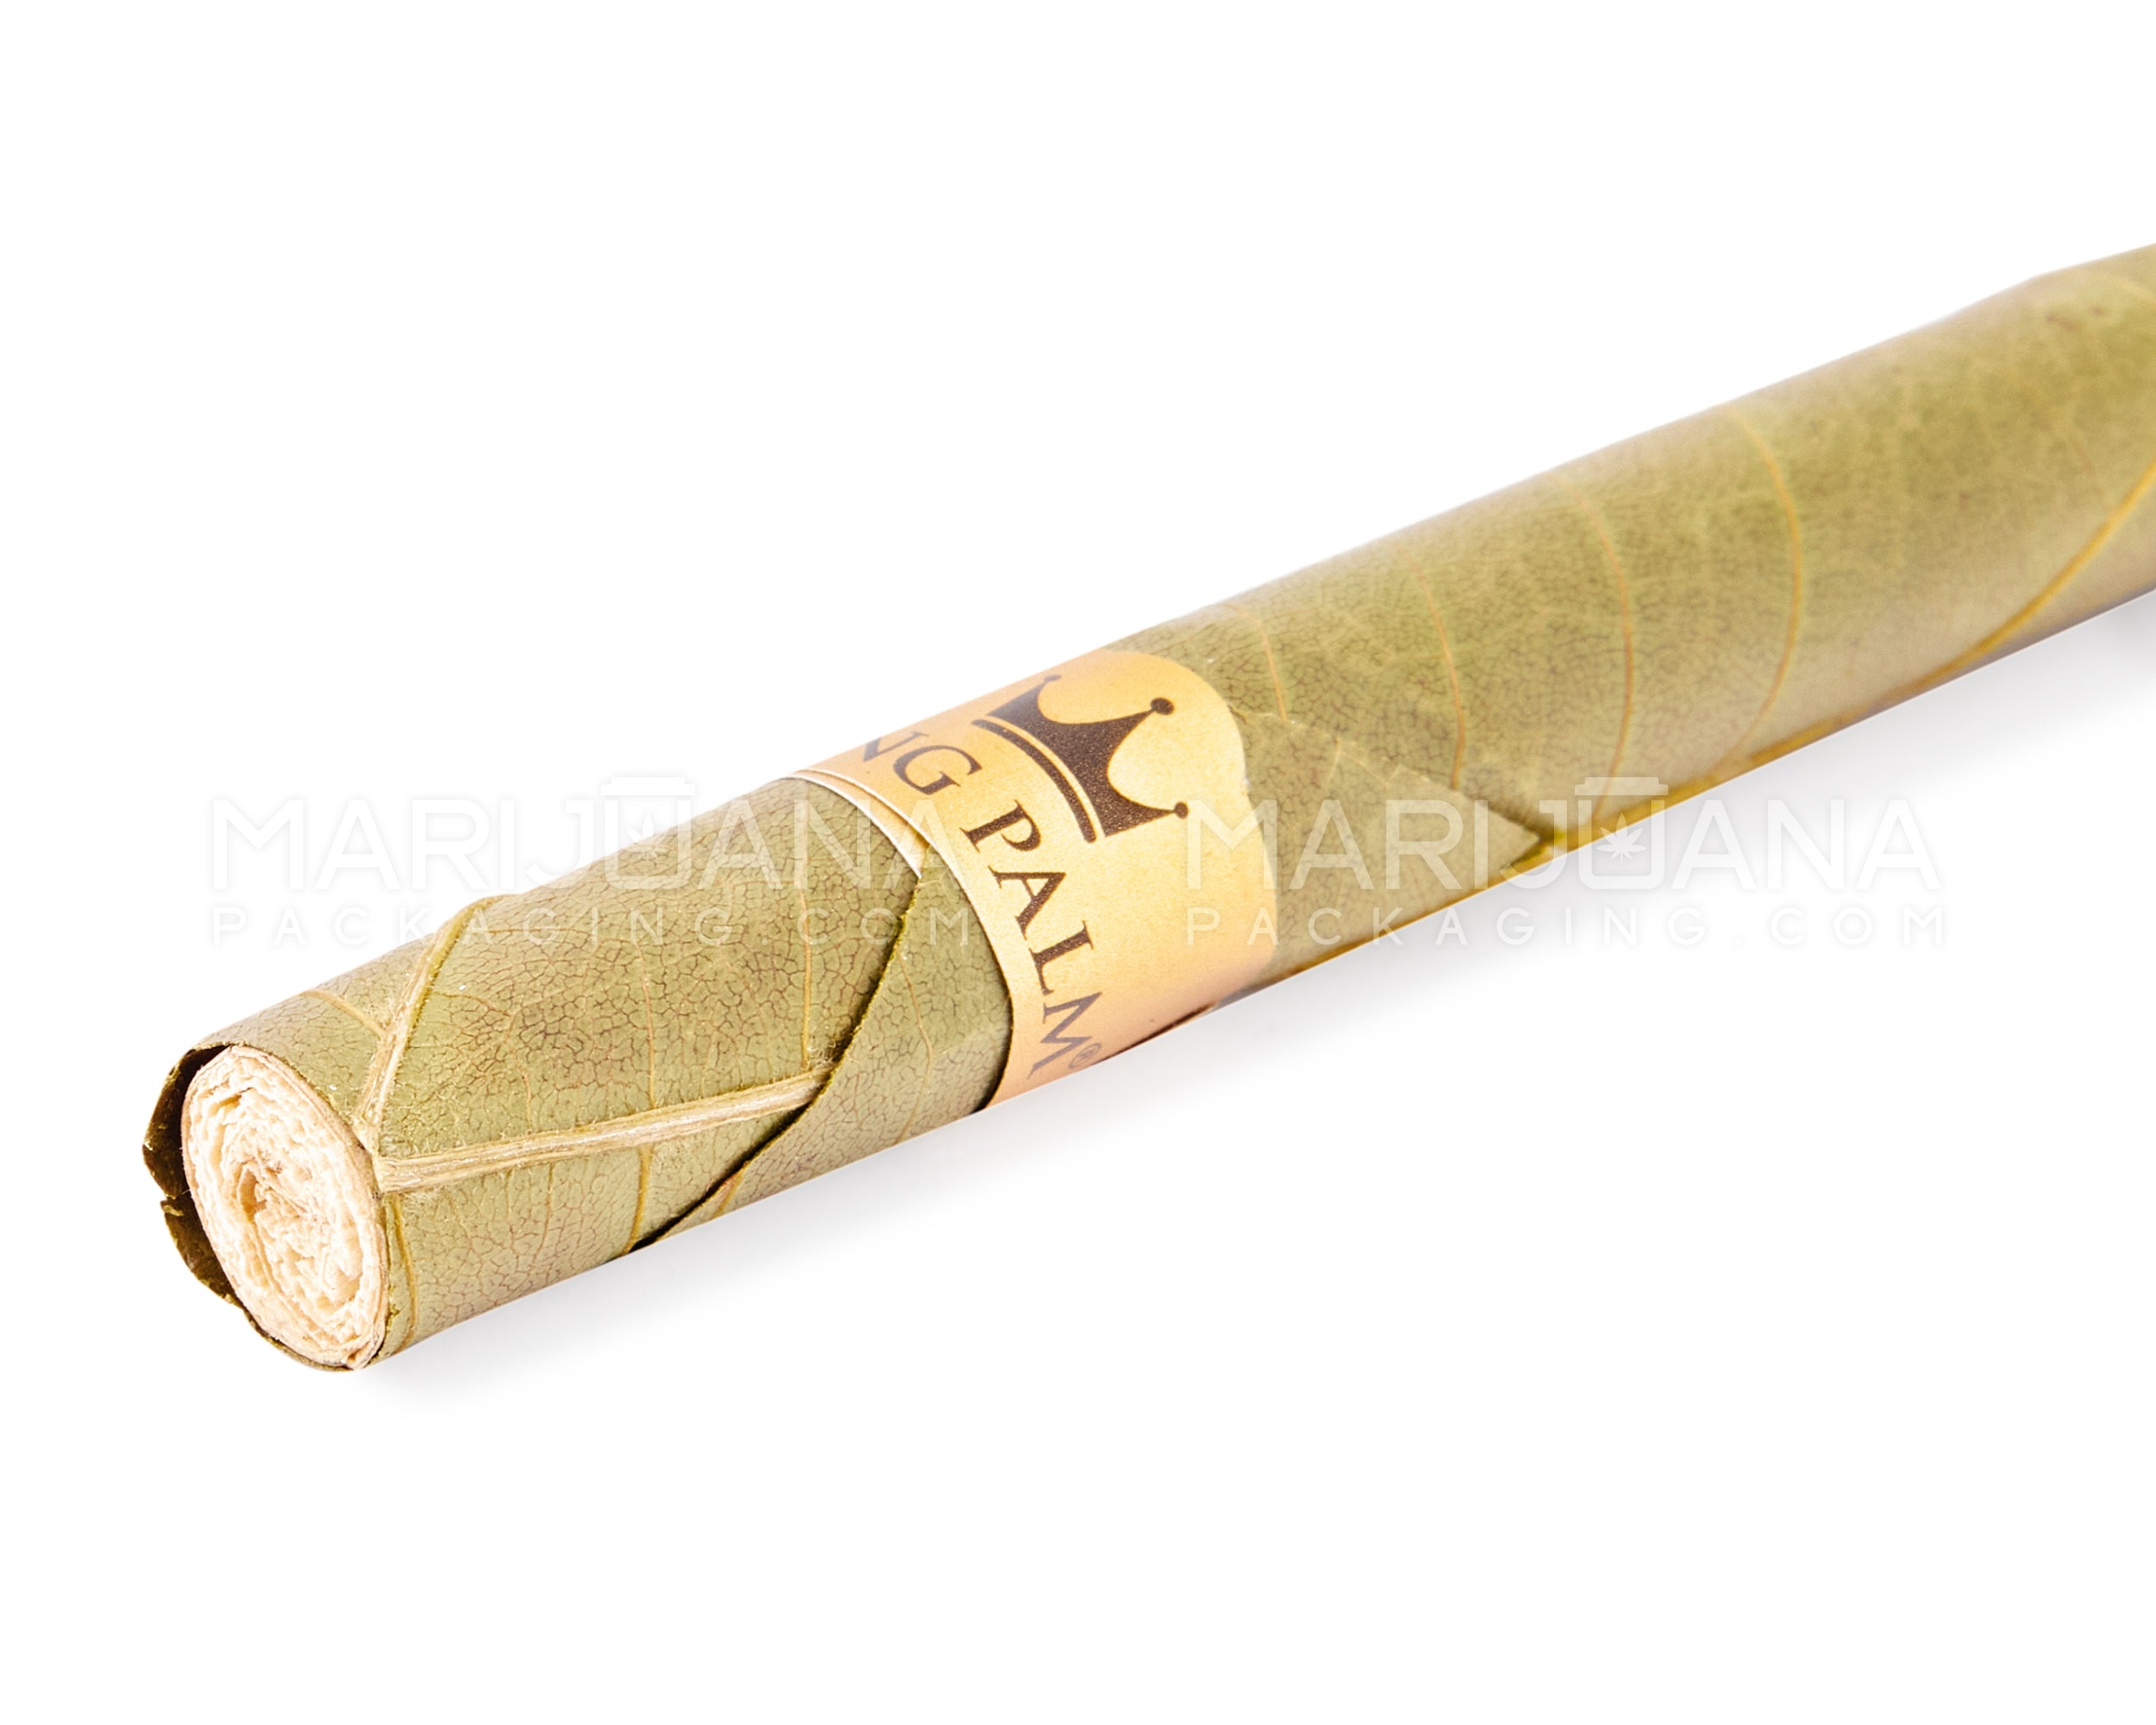 KING PALM | 'Retail Display' Mini Green Natural Leaf Blunt Wraps | 84mm - Banana Cream - 15 Count